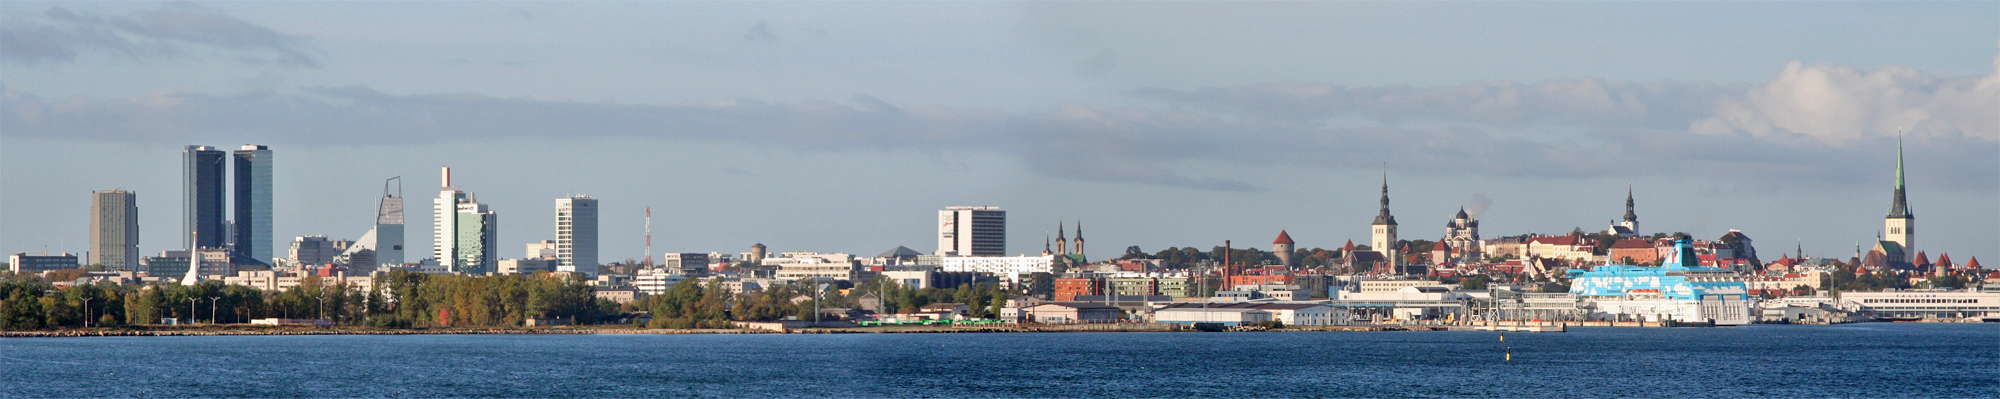 TallinnPan.jpg